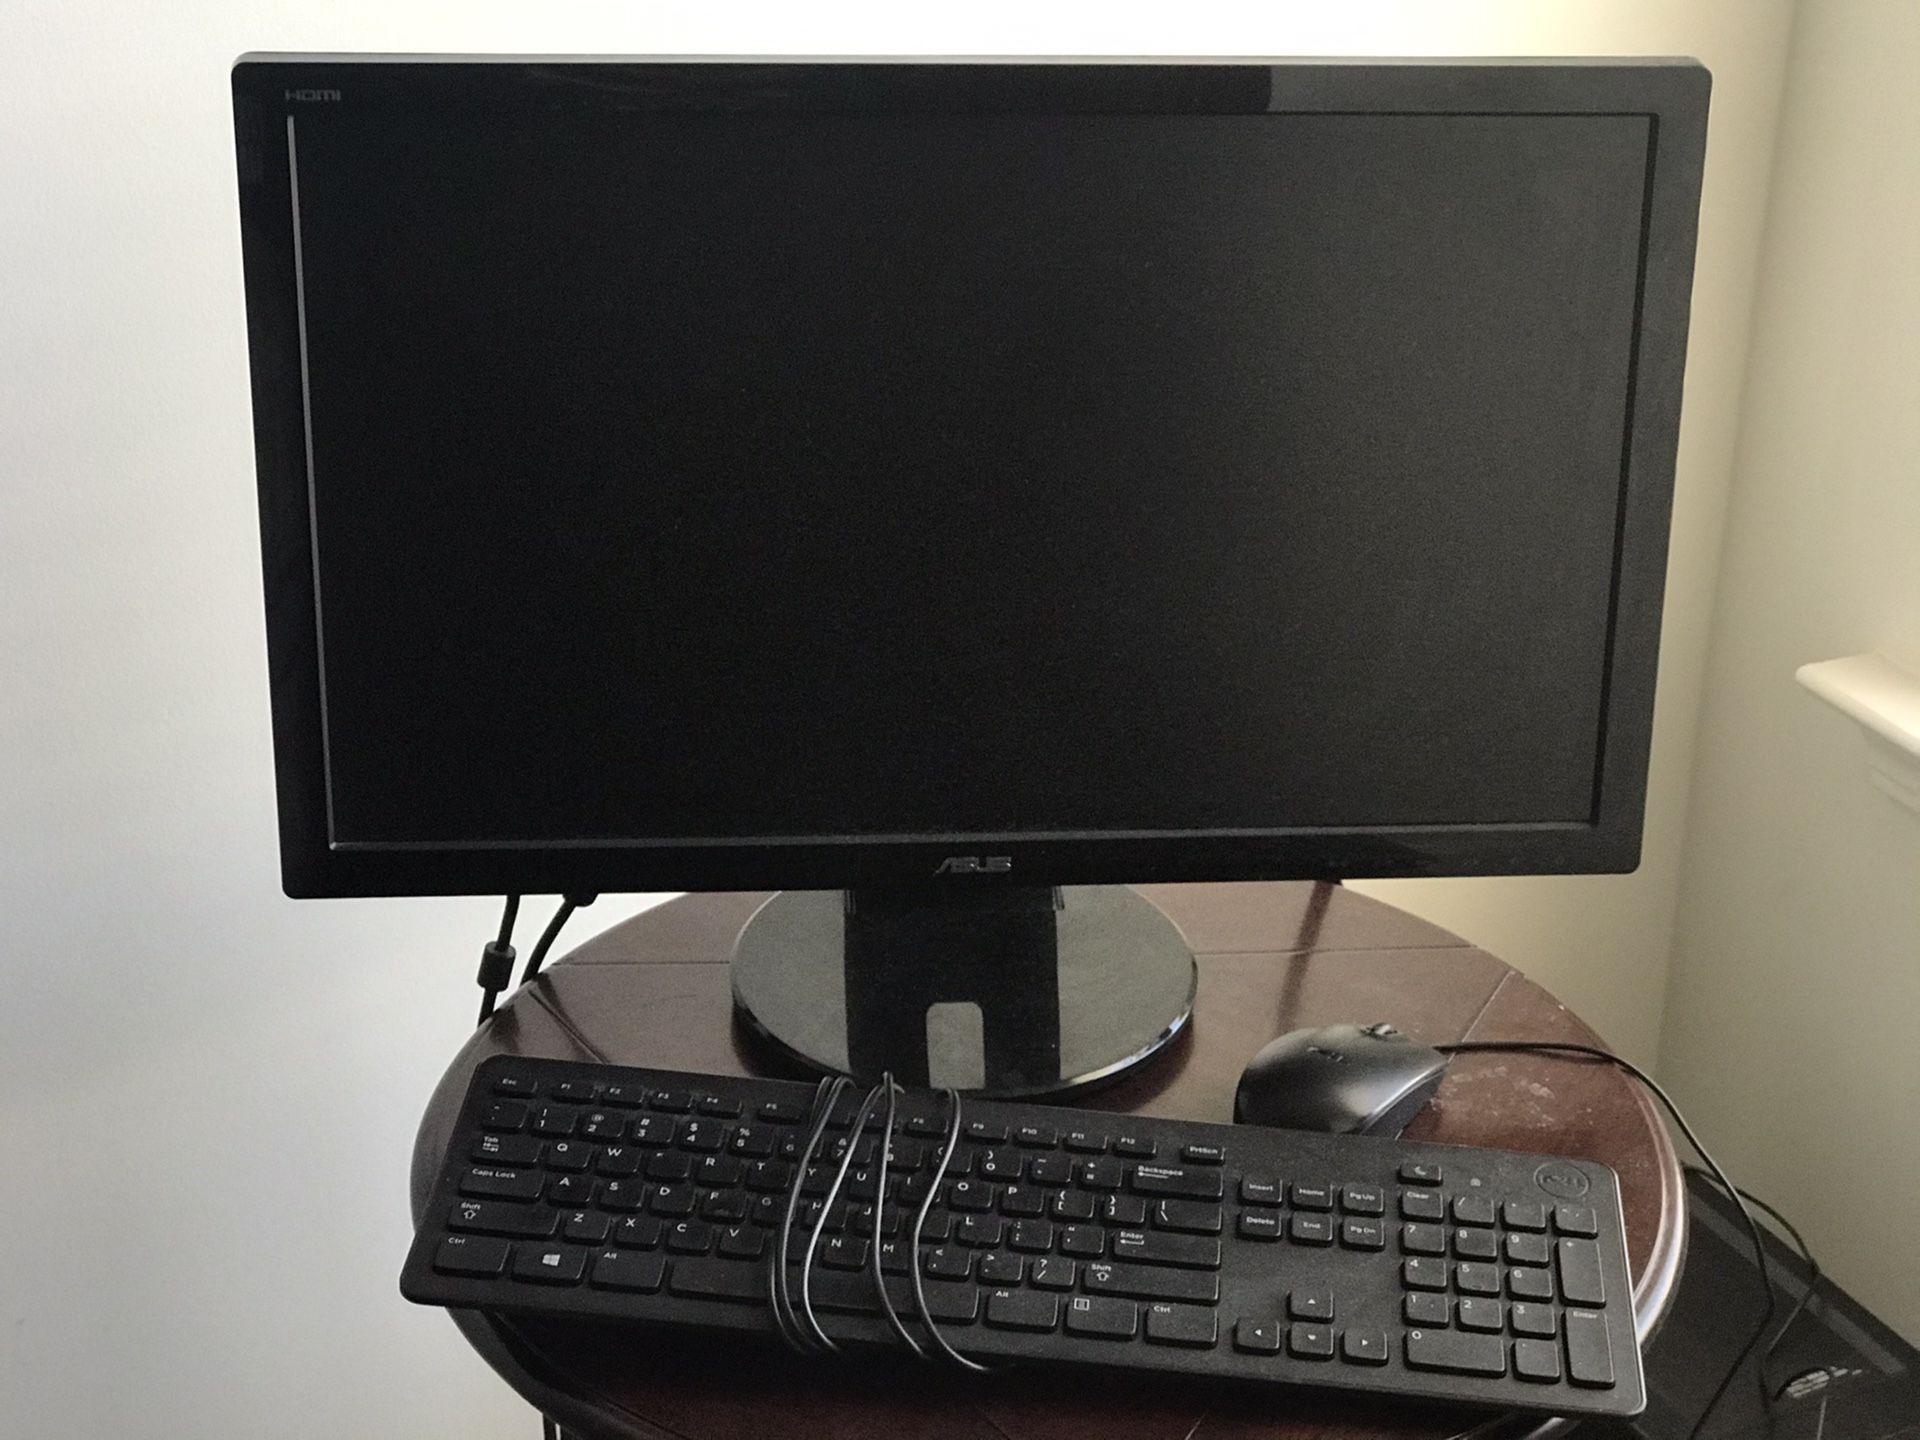 Computer monitor, keyboard & mouse